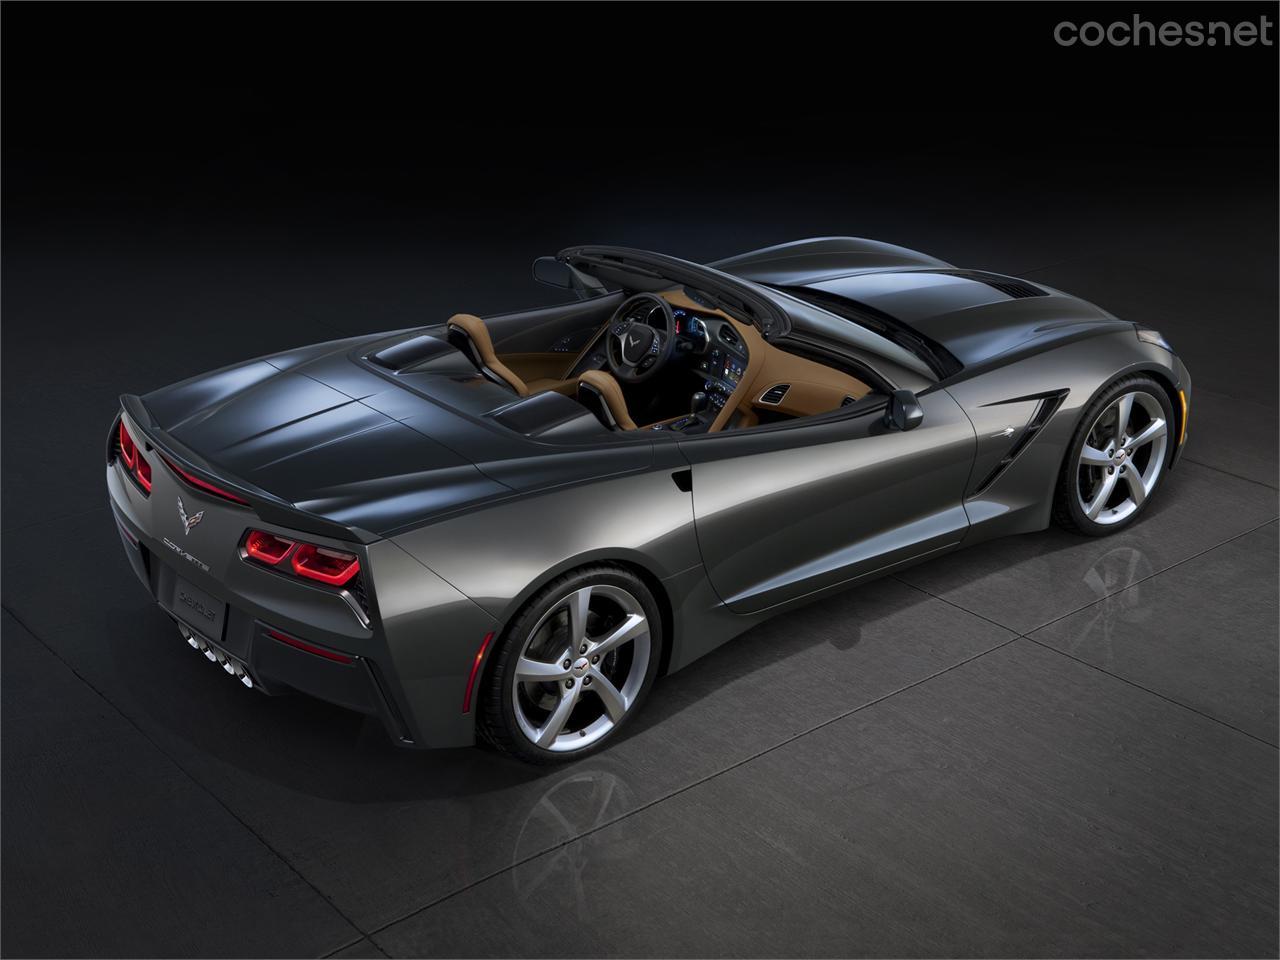 conformidad Fanático enjuague Nuevo CHEVROLET Corvette | Noticias Coches.net